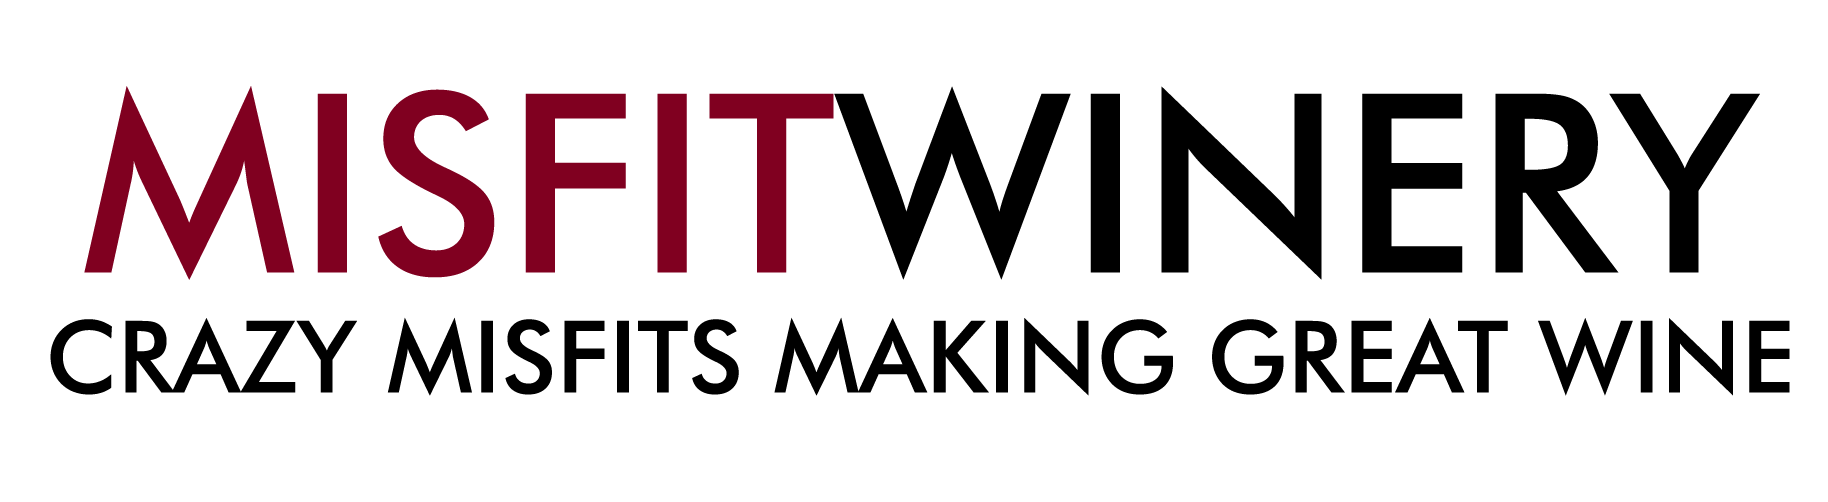 Misfit Main Logo.png